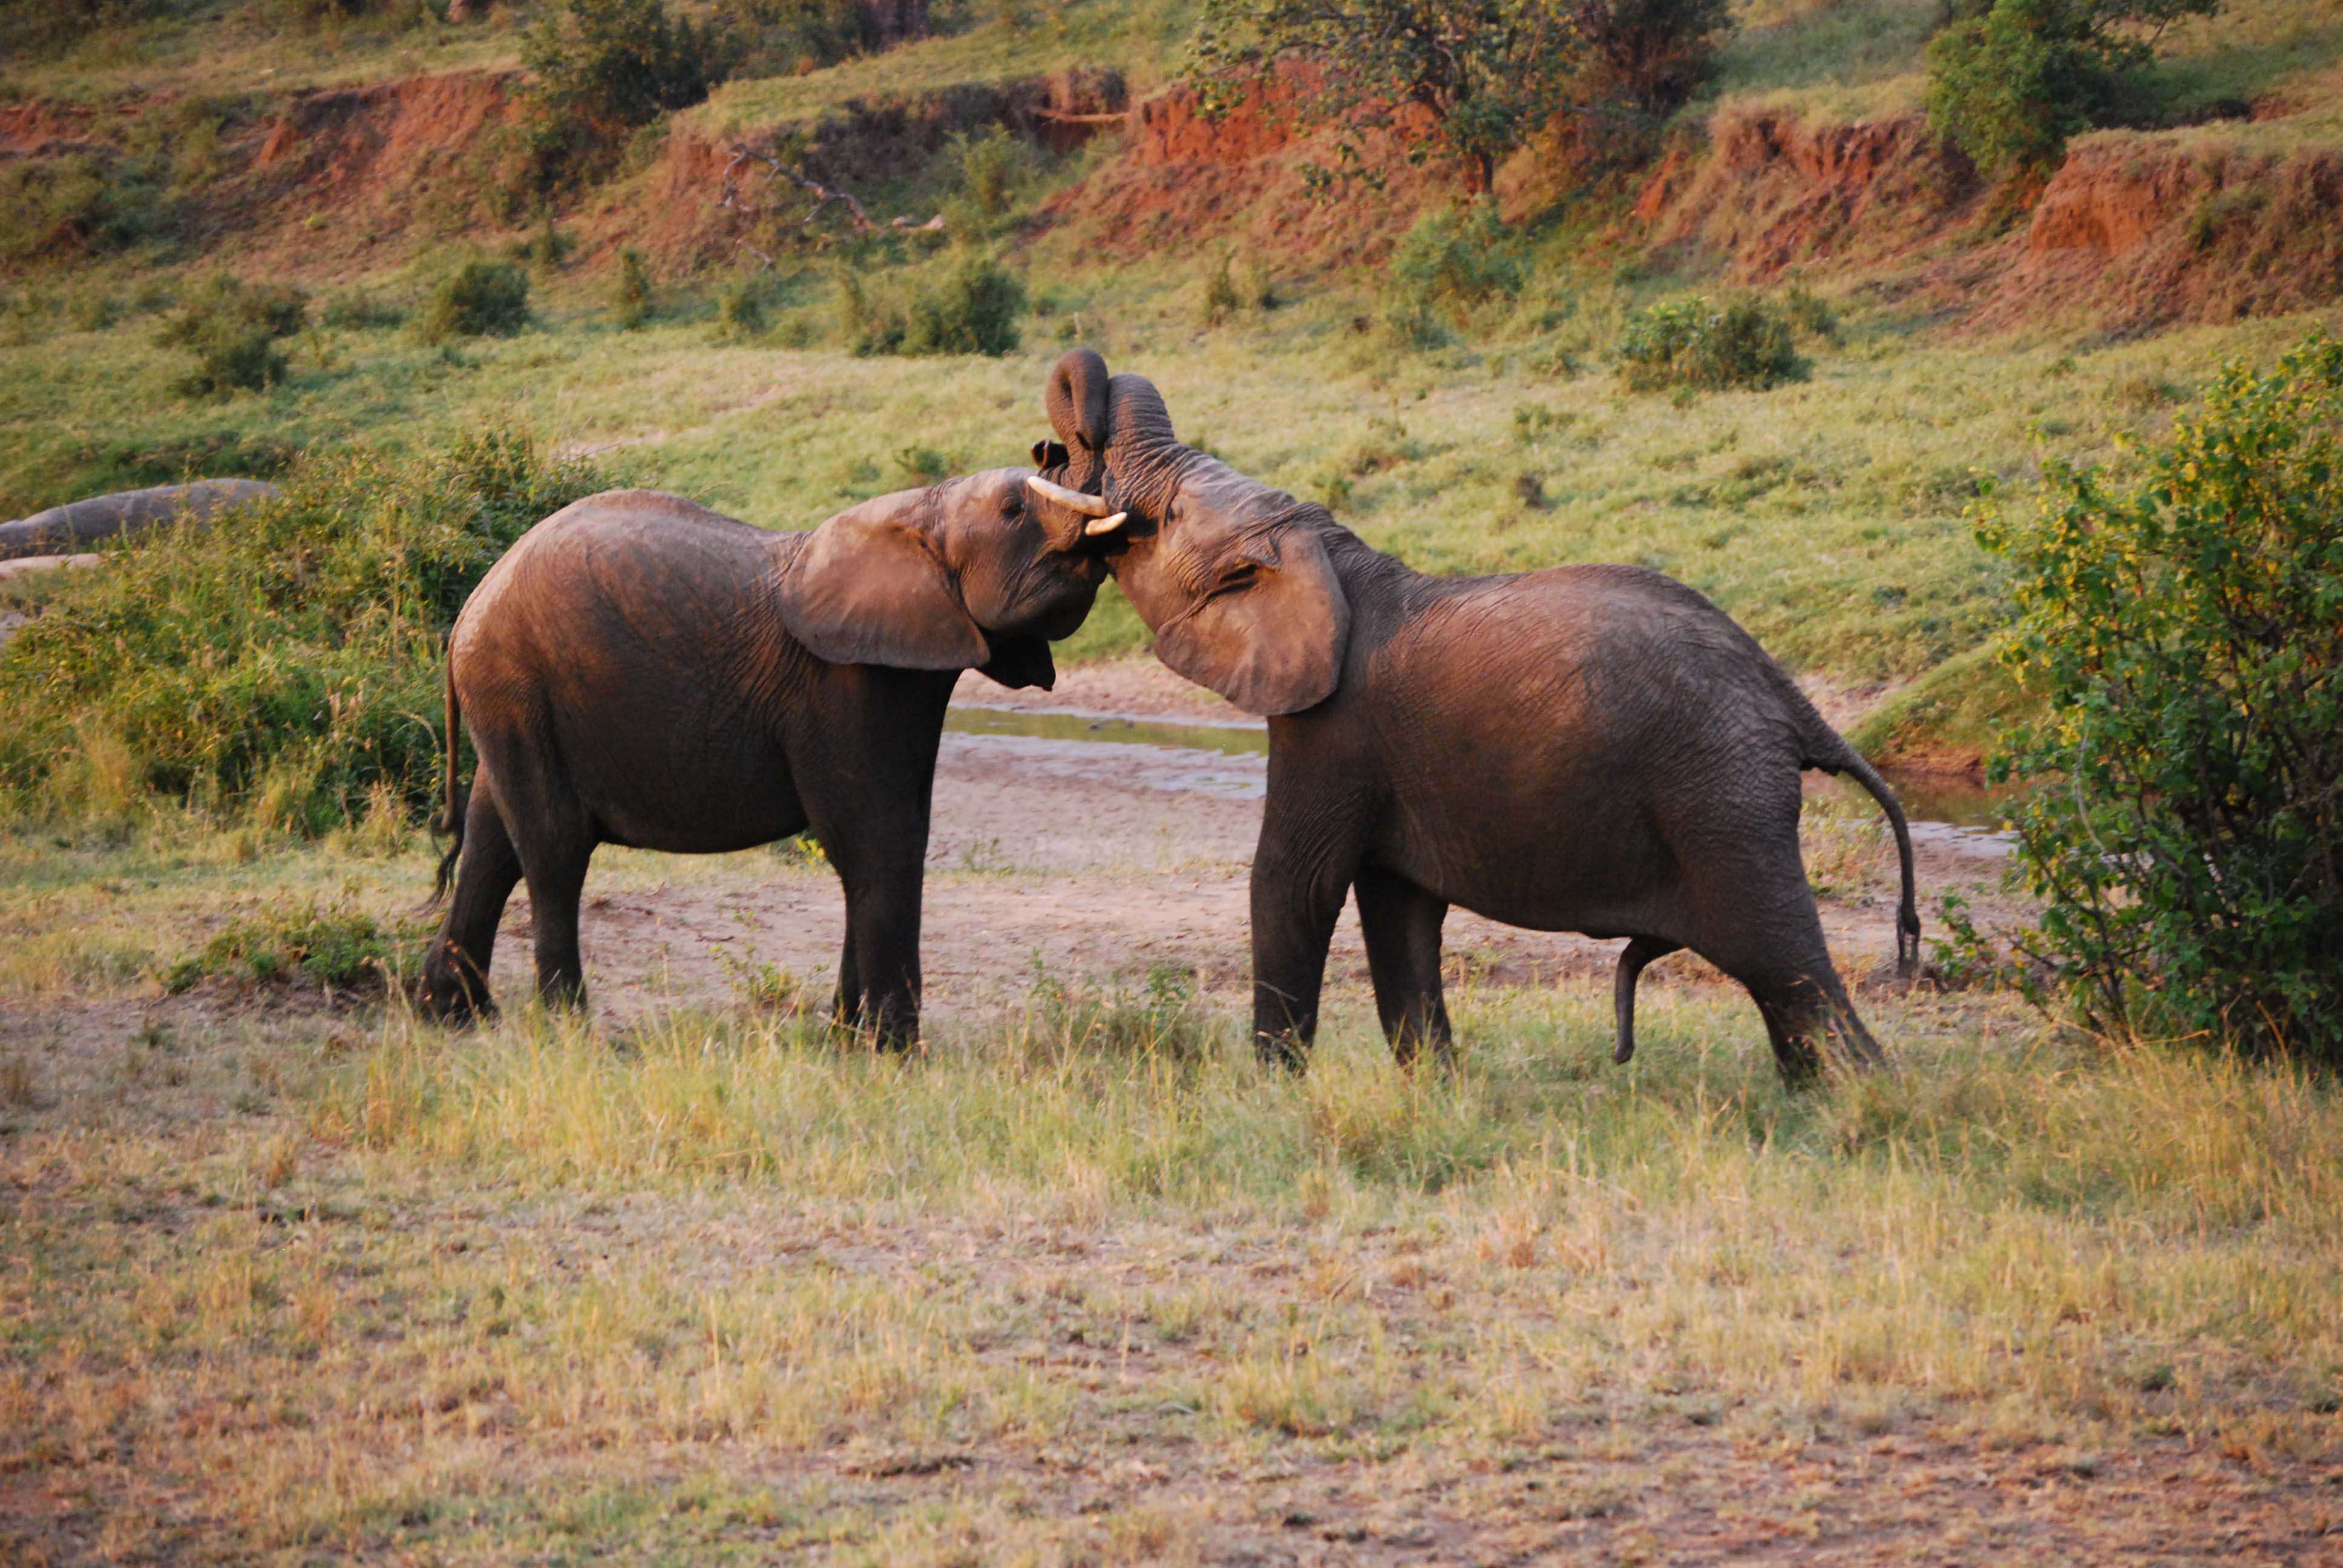 Nuestro primer safari - Regreso al Mara - Kenia (3)